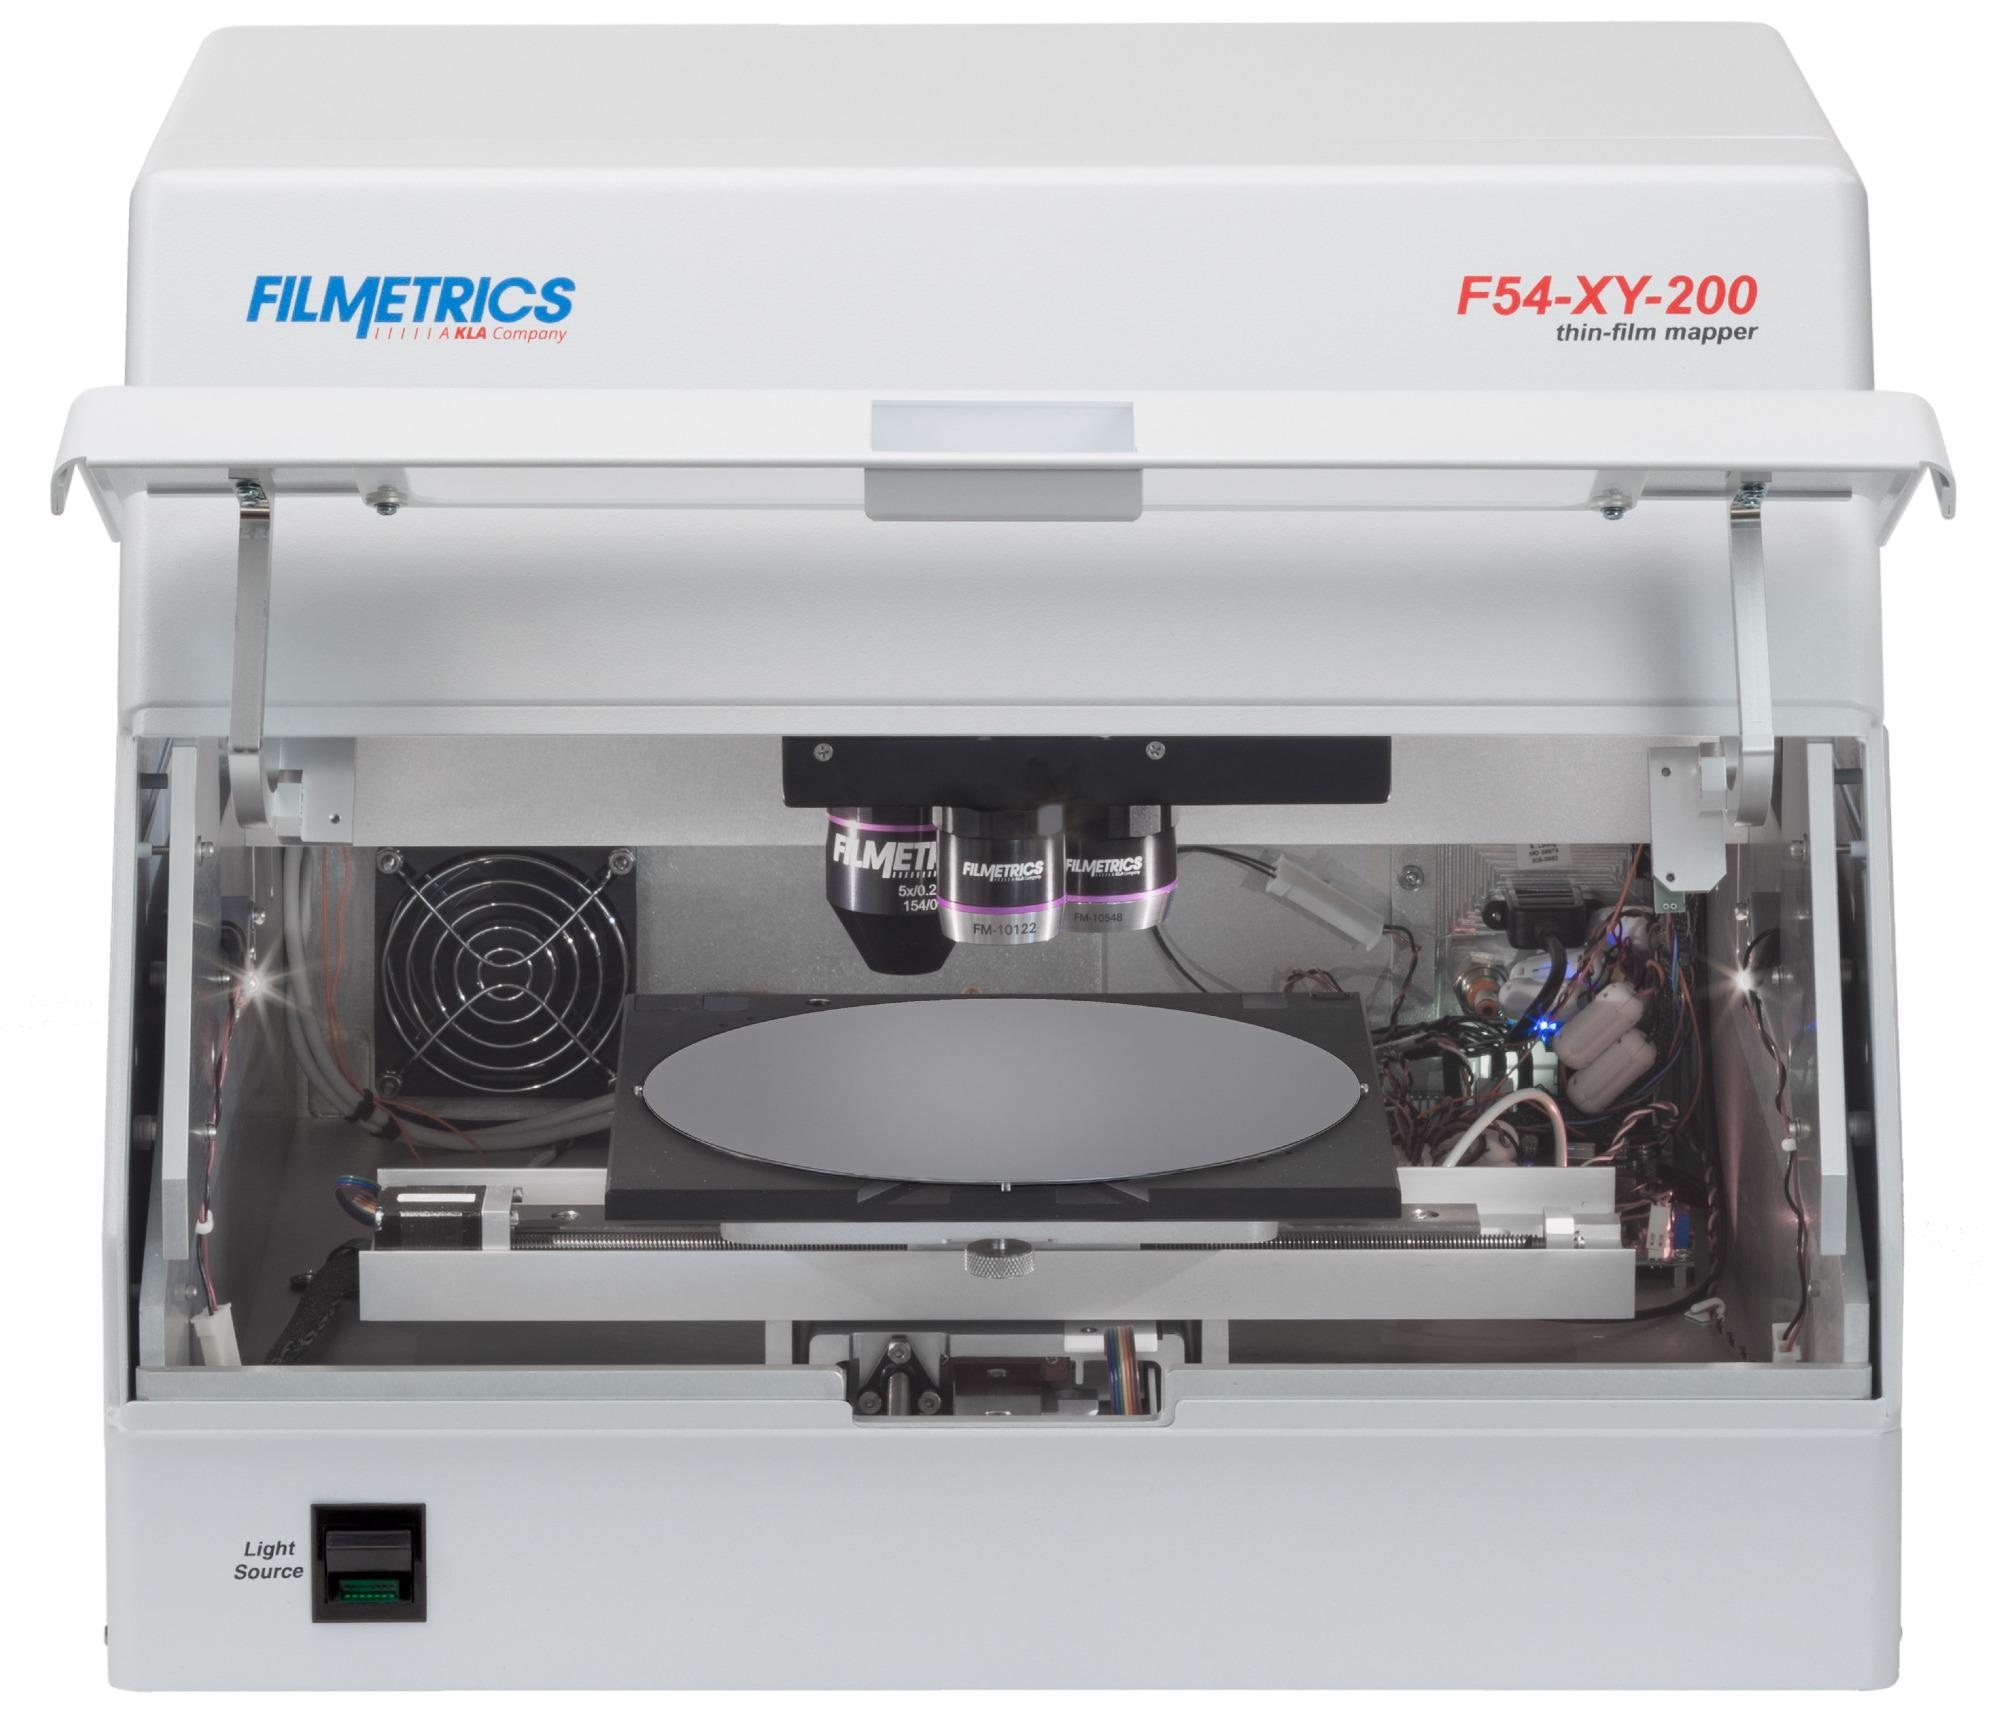 Filmetrics F54-XY-200 film thickness measurement tool